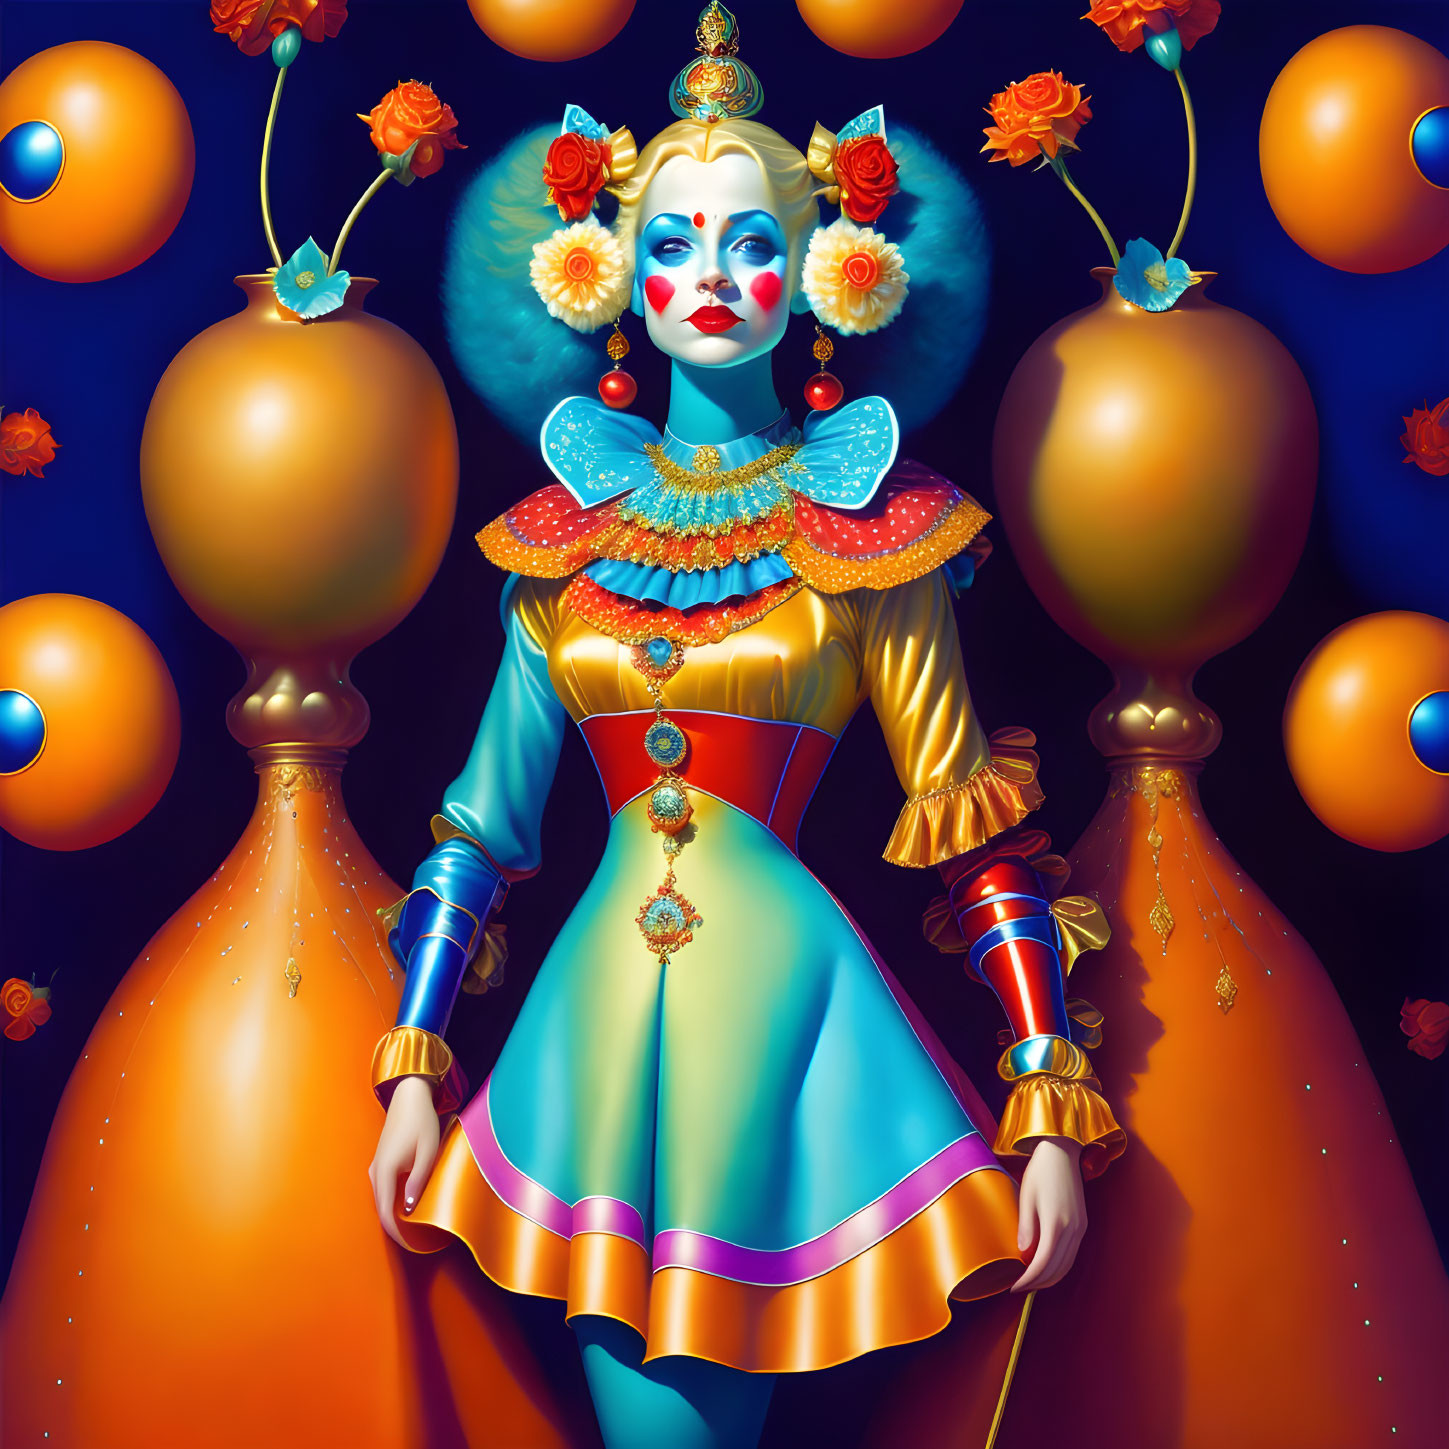 Colorful Stylized Female Figure in Ornate Costume with Blue Skin and Elaborate Headdress